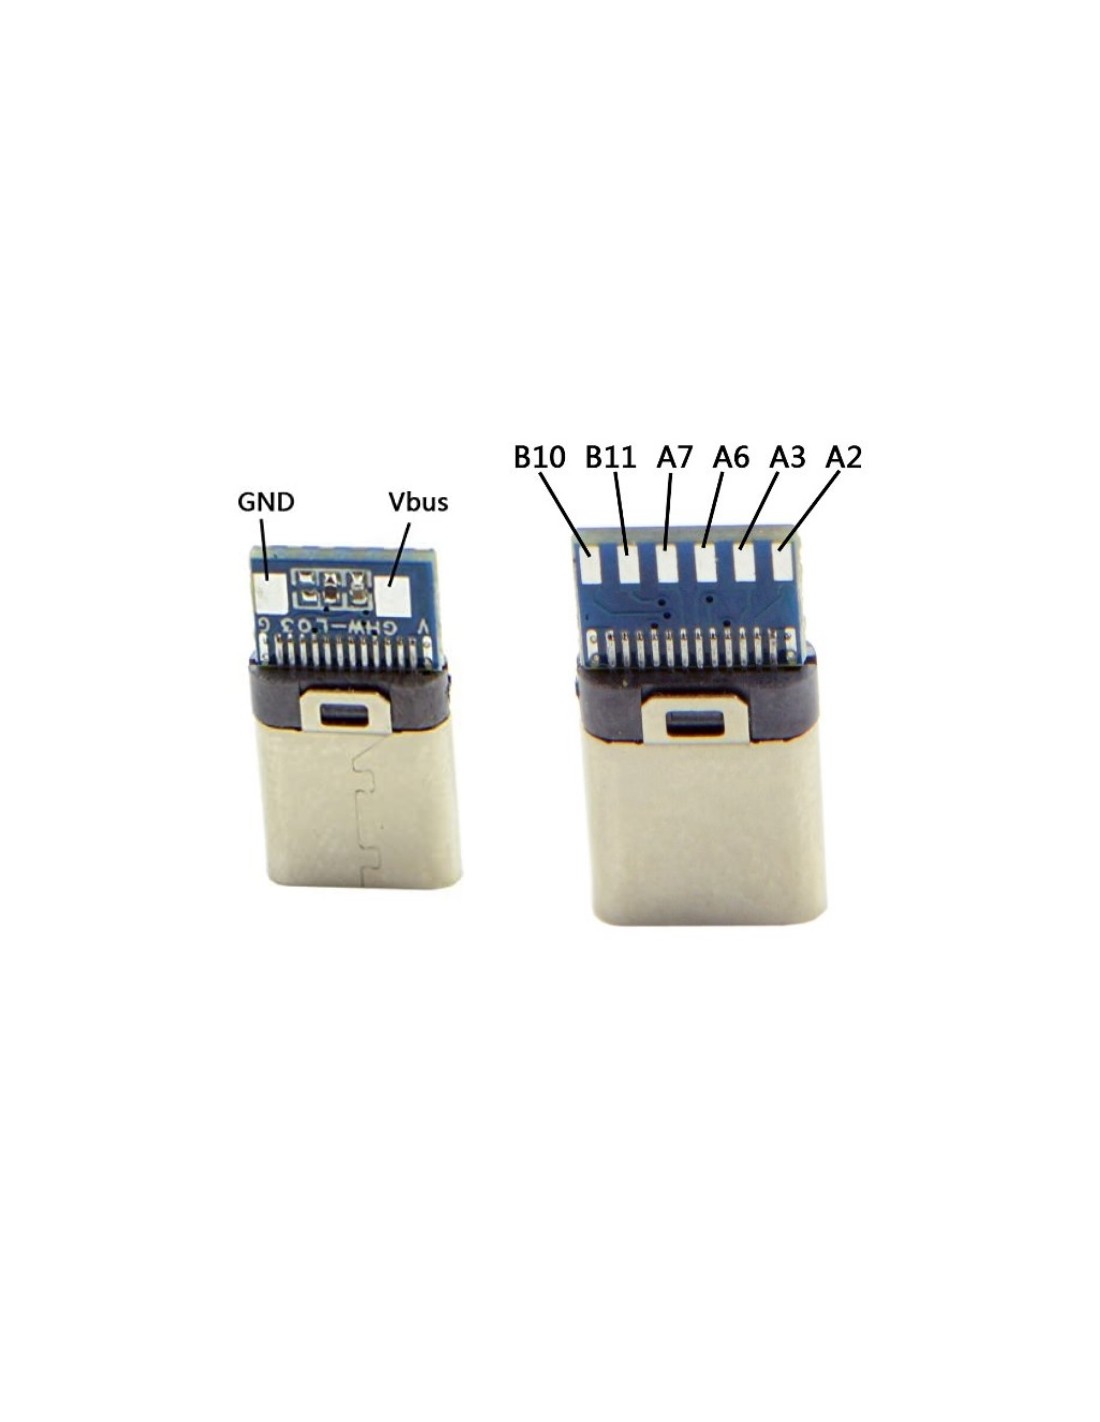 Conector USB Tipo C Hembra SMD - 24 pines/contactos